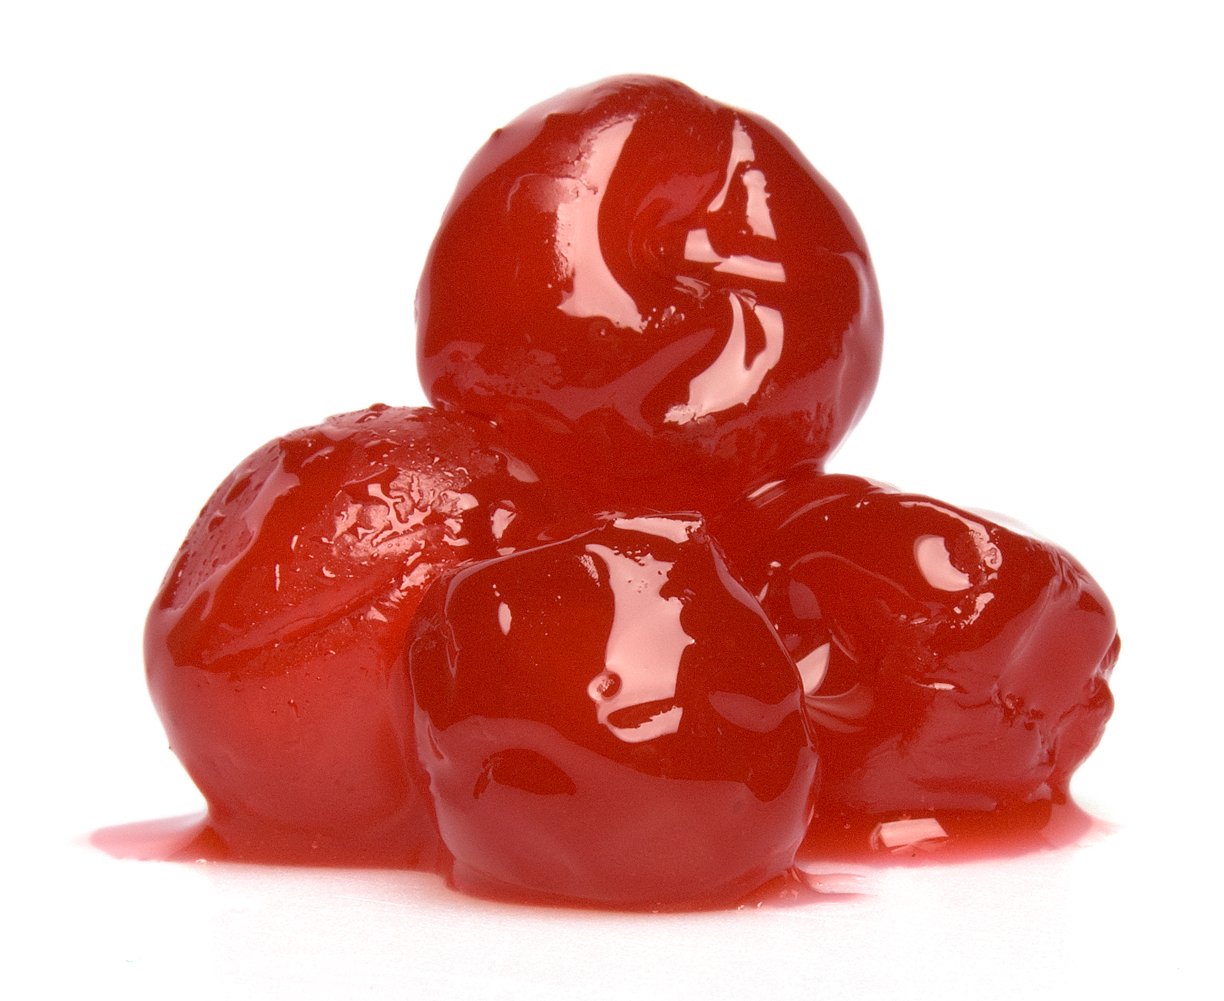 Glazed Red Cherries photo